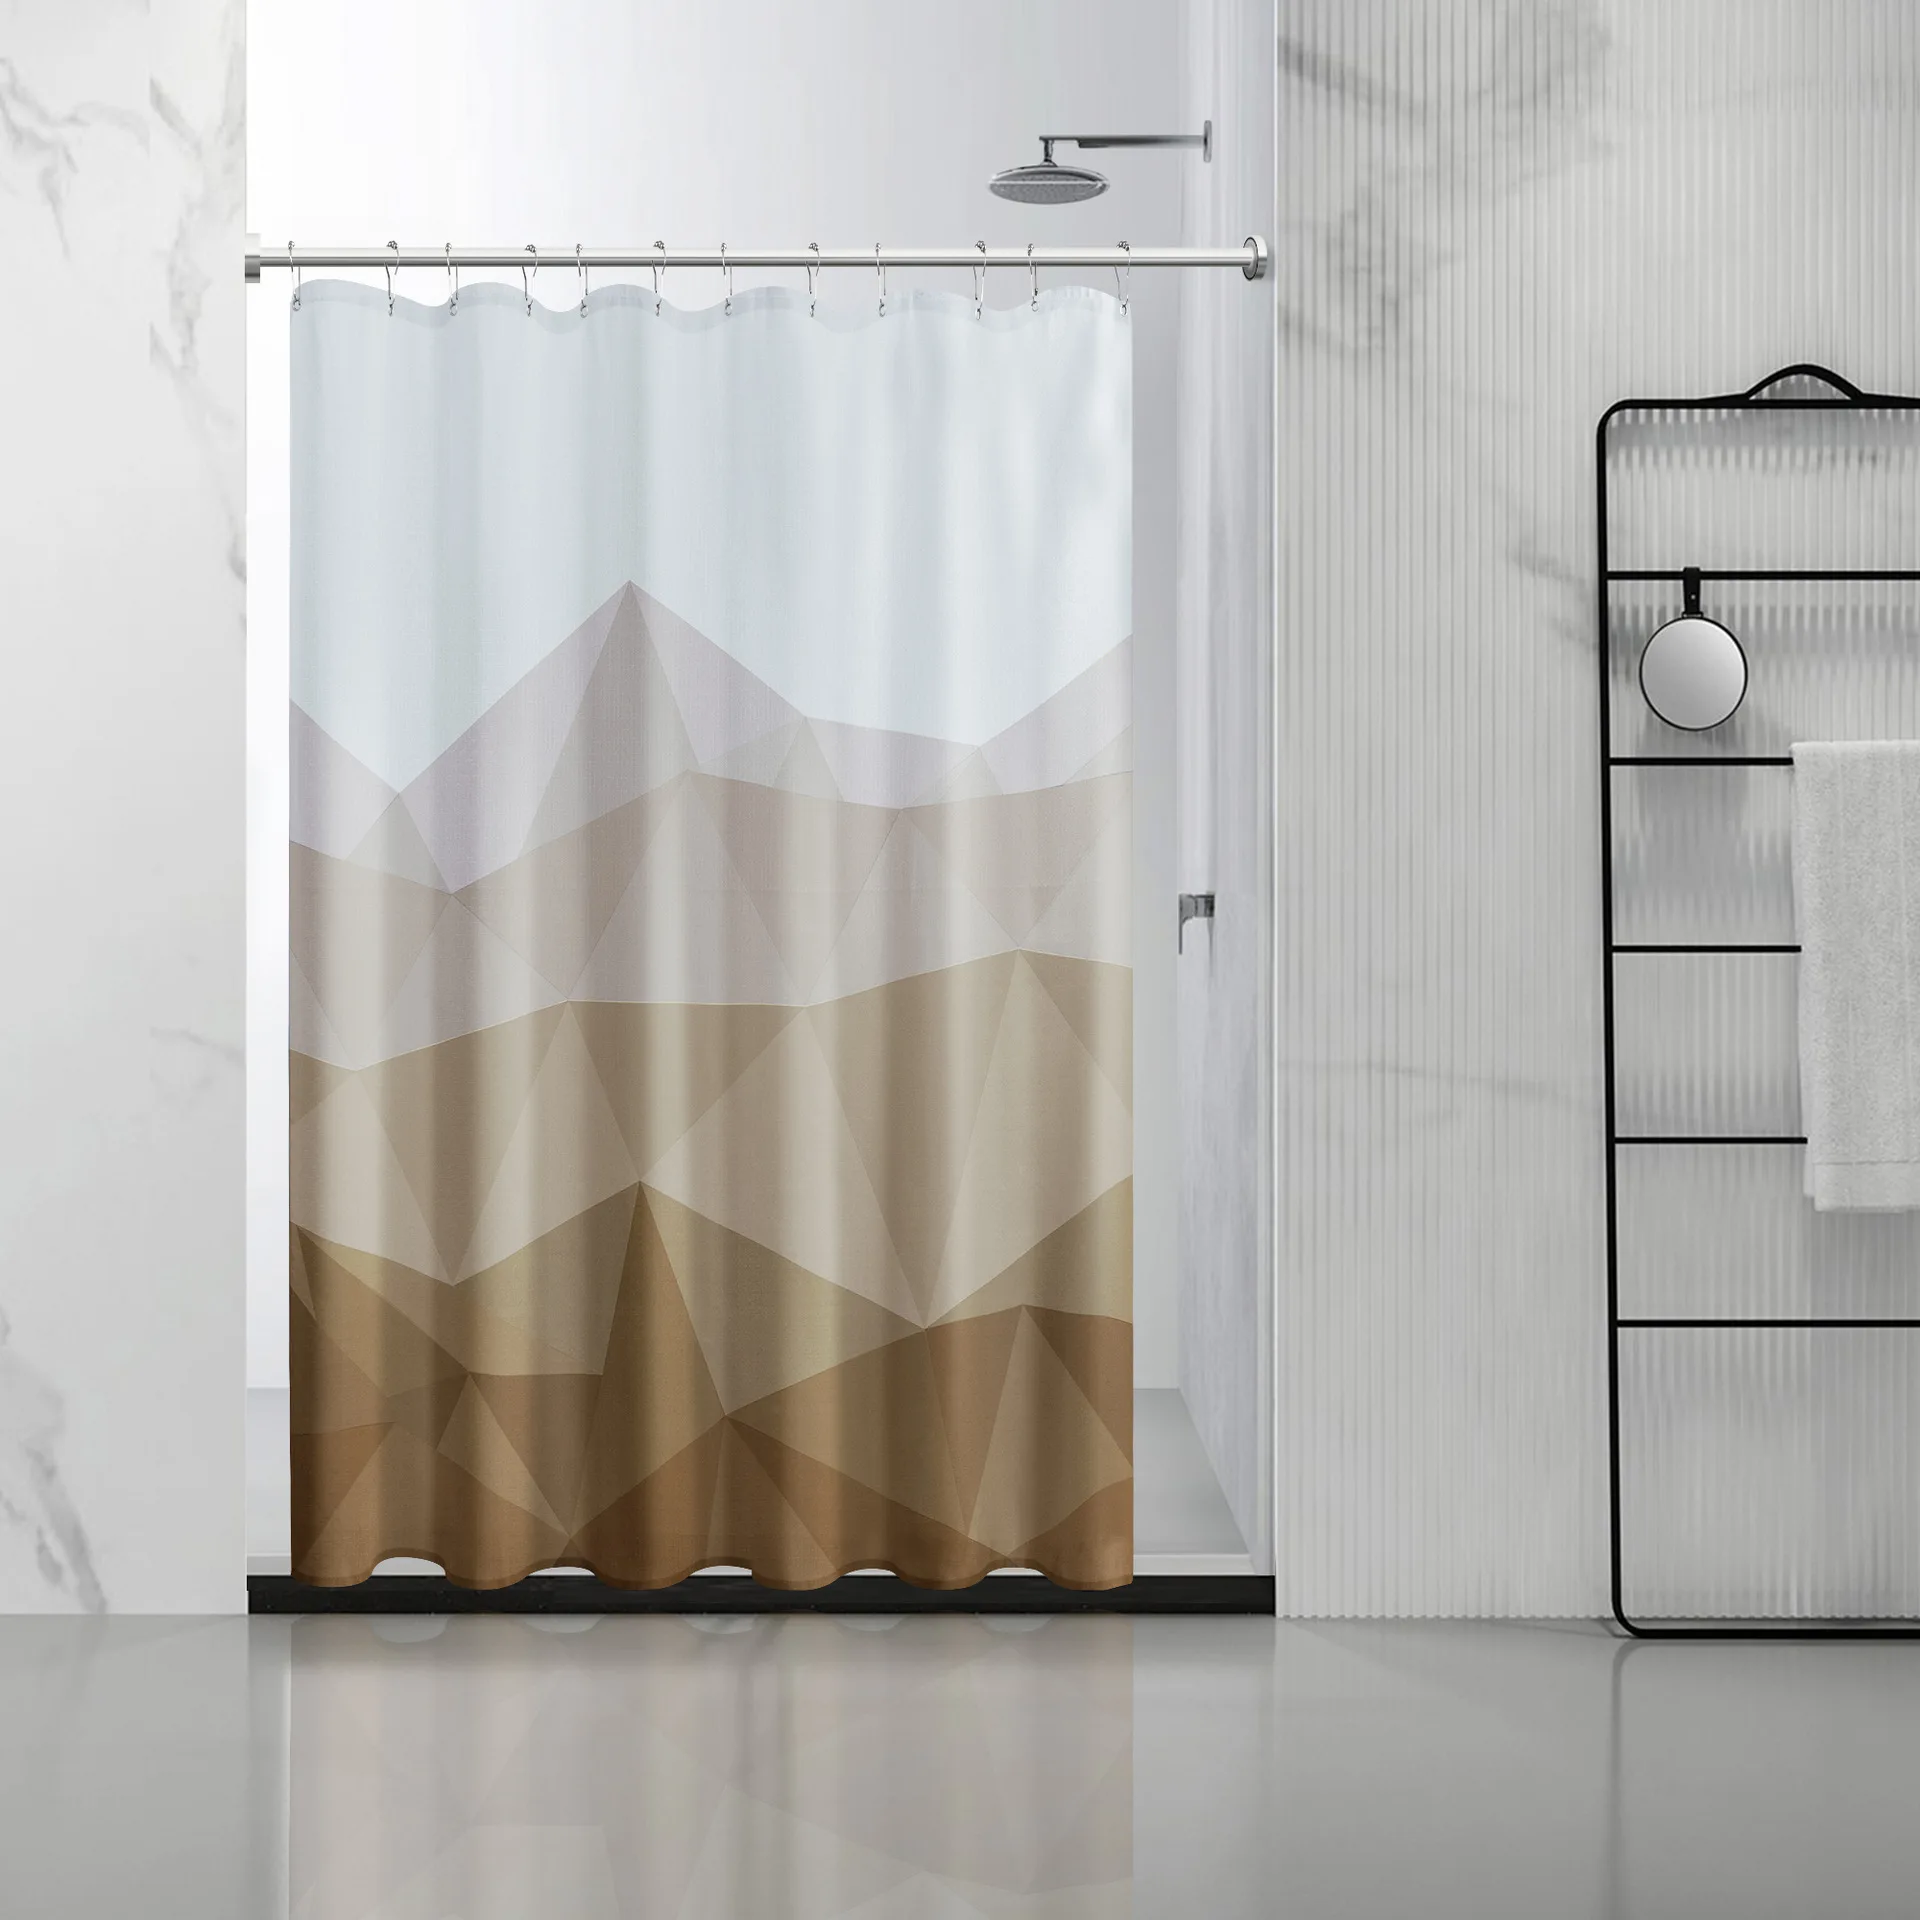 

Geometric Shower Curtain Household Waterproof Bathroom Curtains Rectangle Bathroom Insulation for Home Hotel